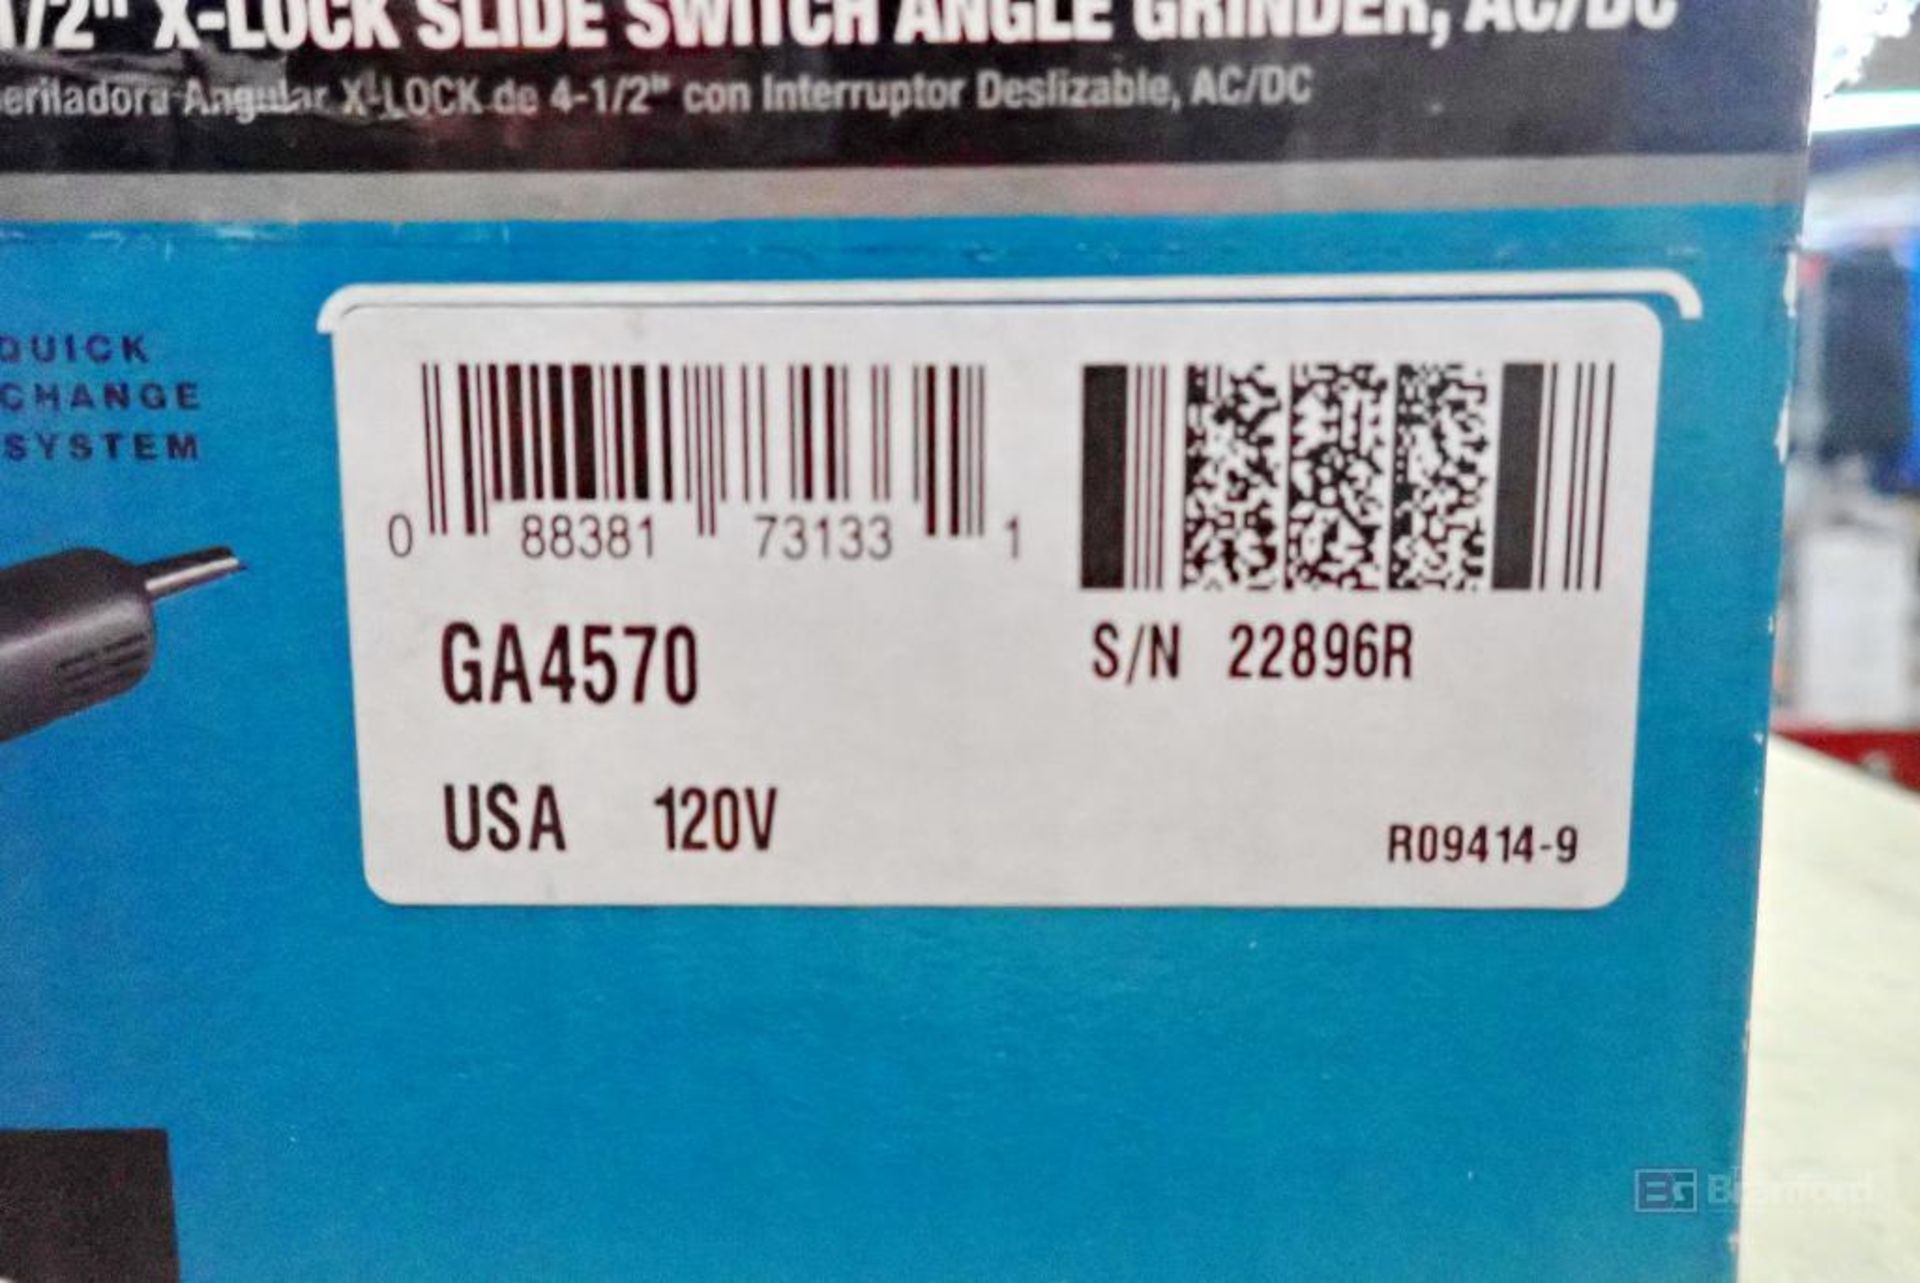 Makita GA4570 4-1/2" X-Lock Slide Switch Angle Grinder - Bild 4 aus 8